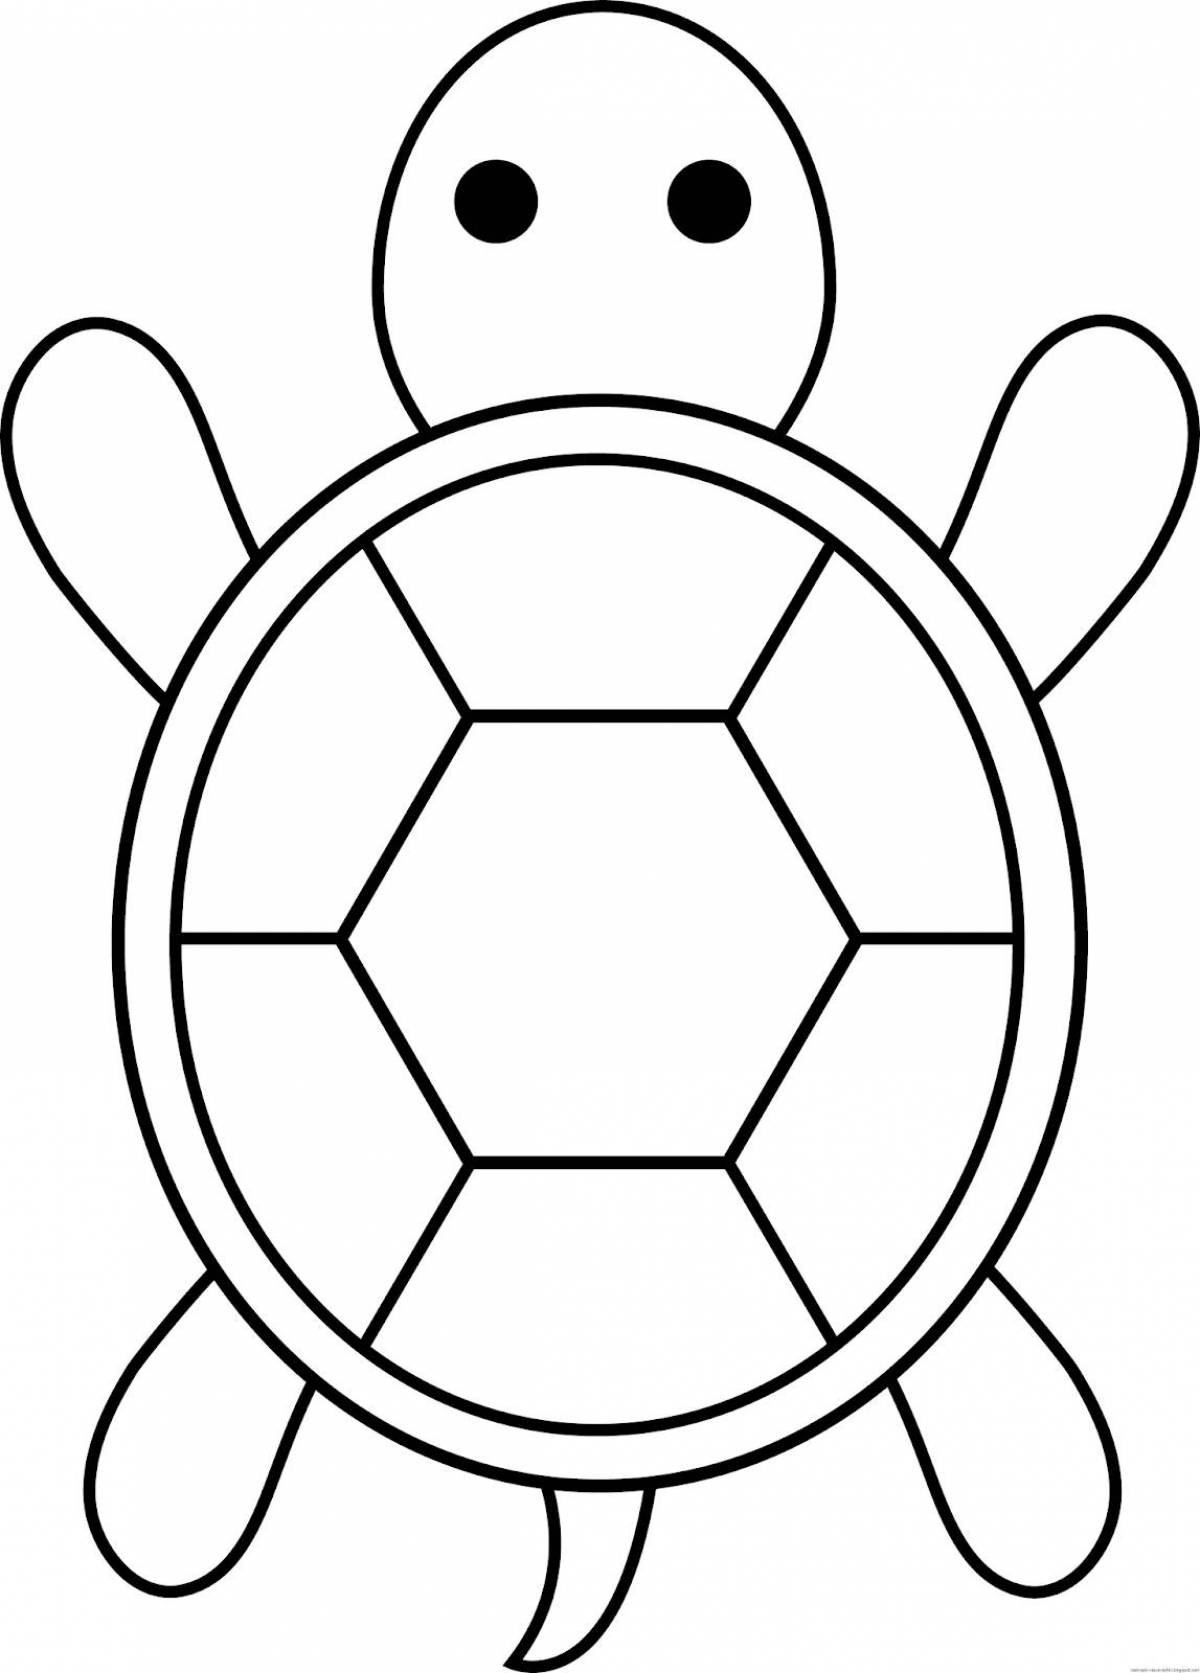 Fun turtle coloring book for kids